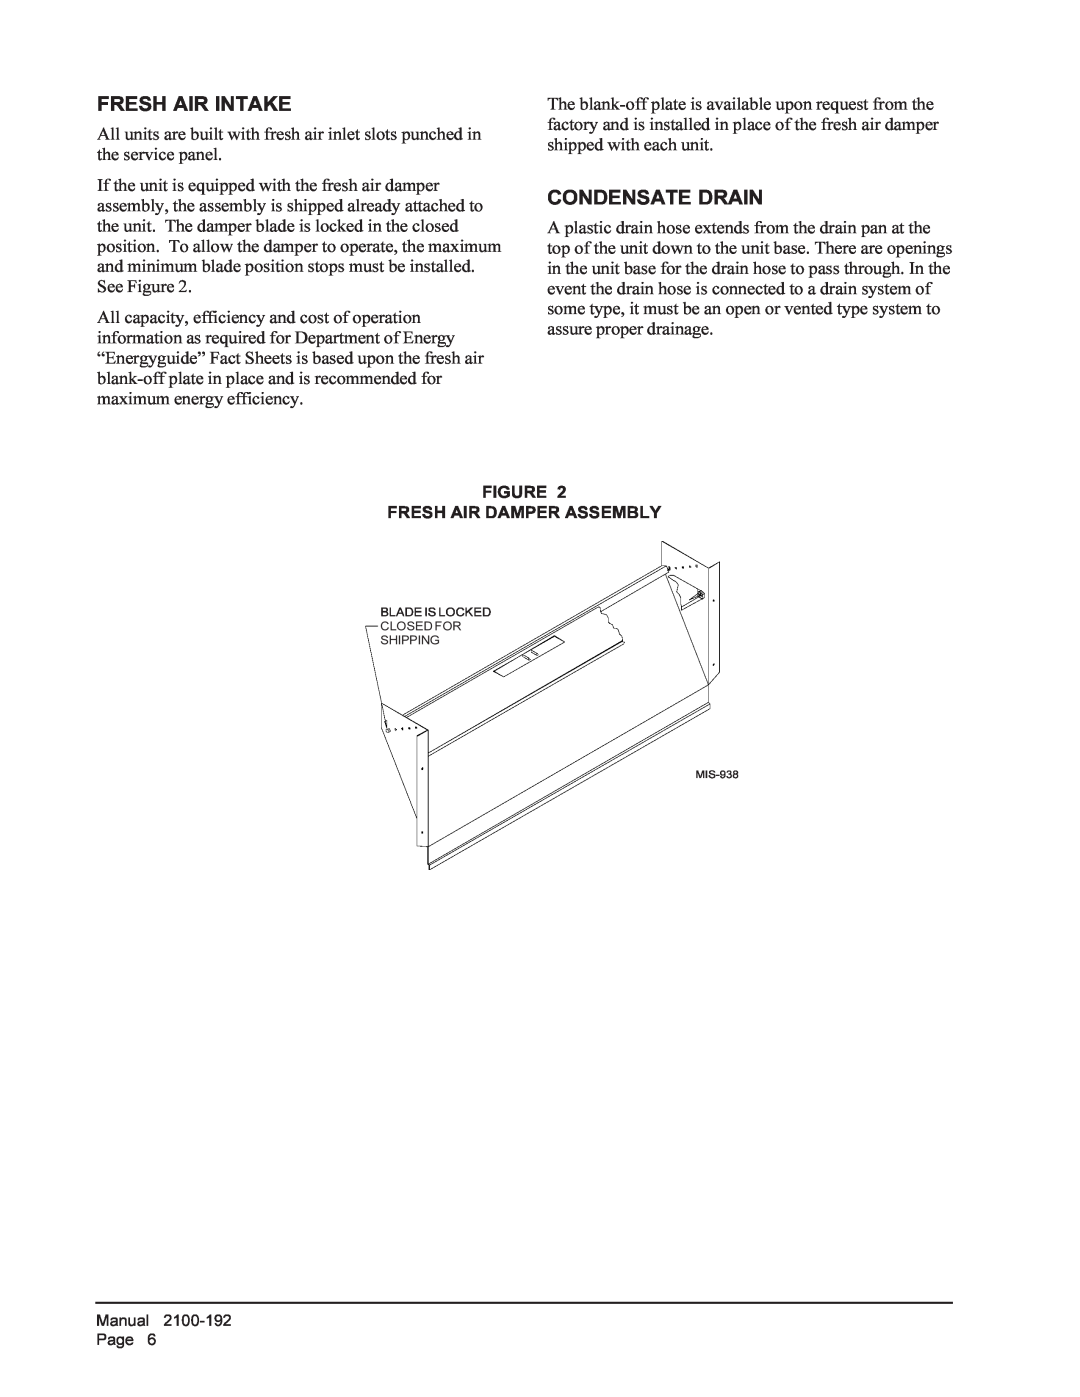 Bard WA361, WA301 installation instructions Fresh Air Intake, Condensate Drain, Figure Fresh Air Damper Assembly 